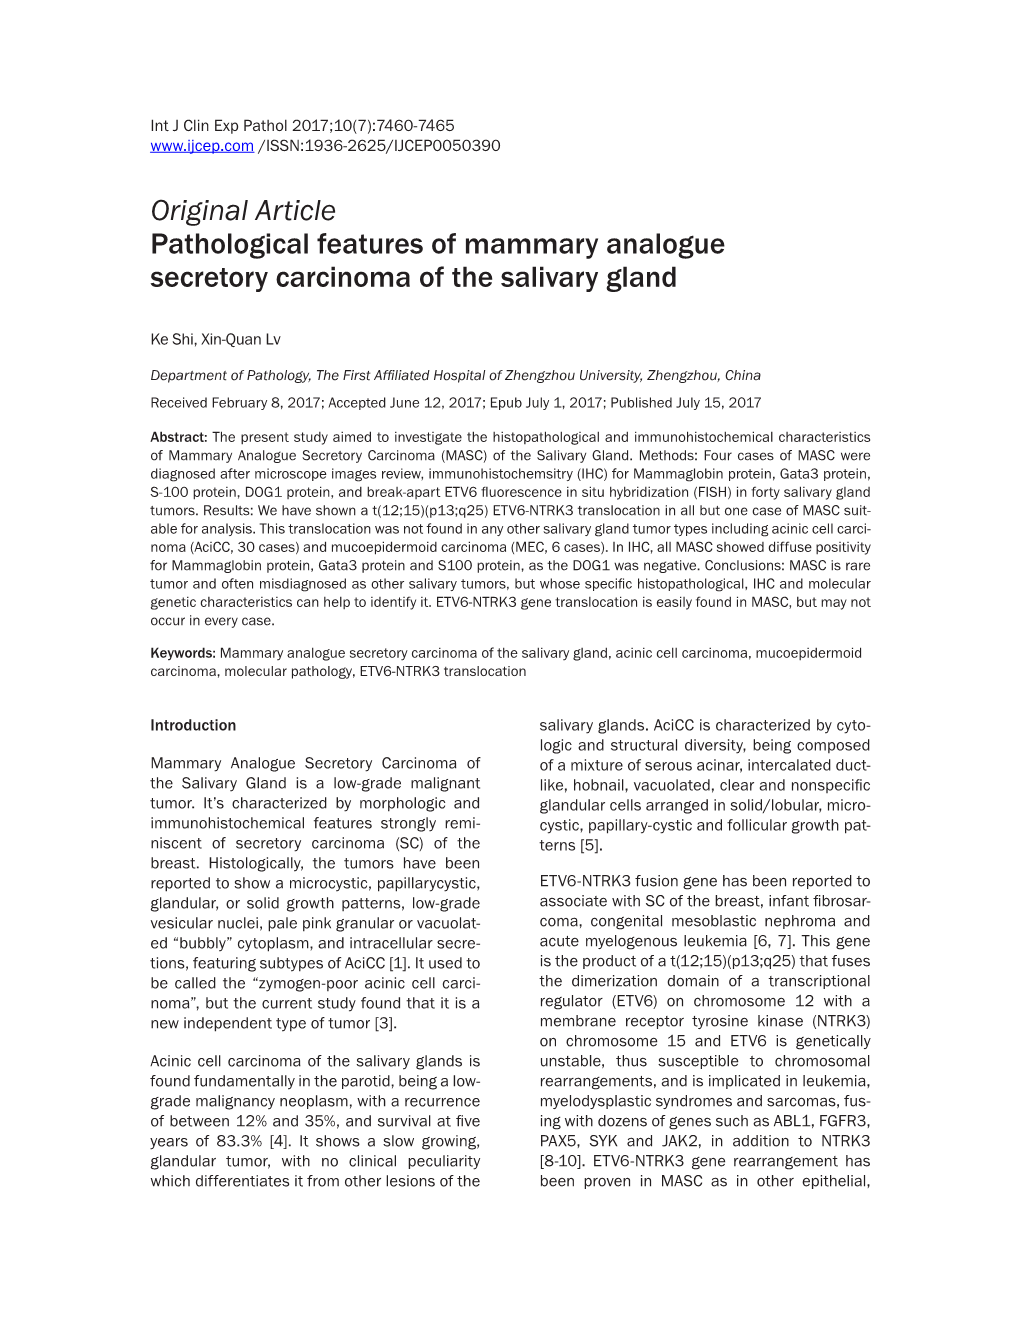 Original Article Pathological Features of Mammary Analogue Secretory Carcinoma of the Salivary Gland